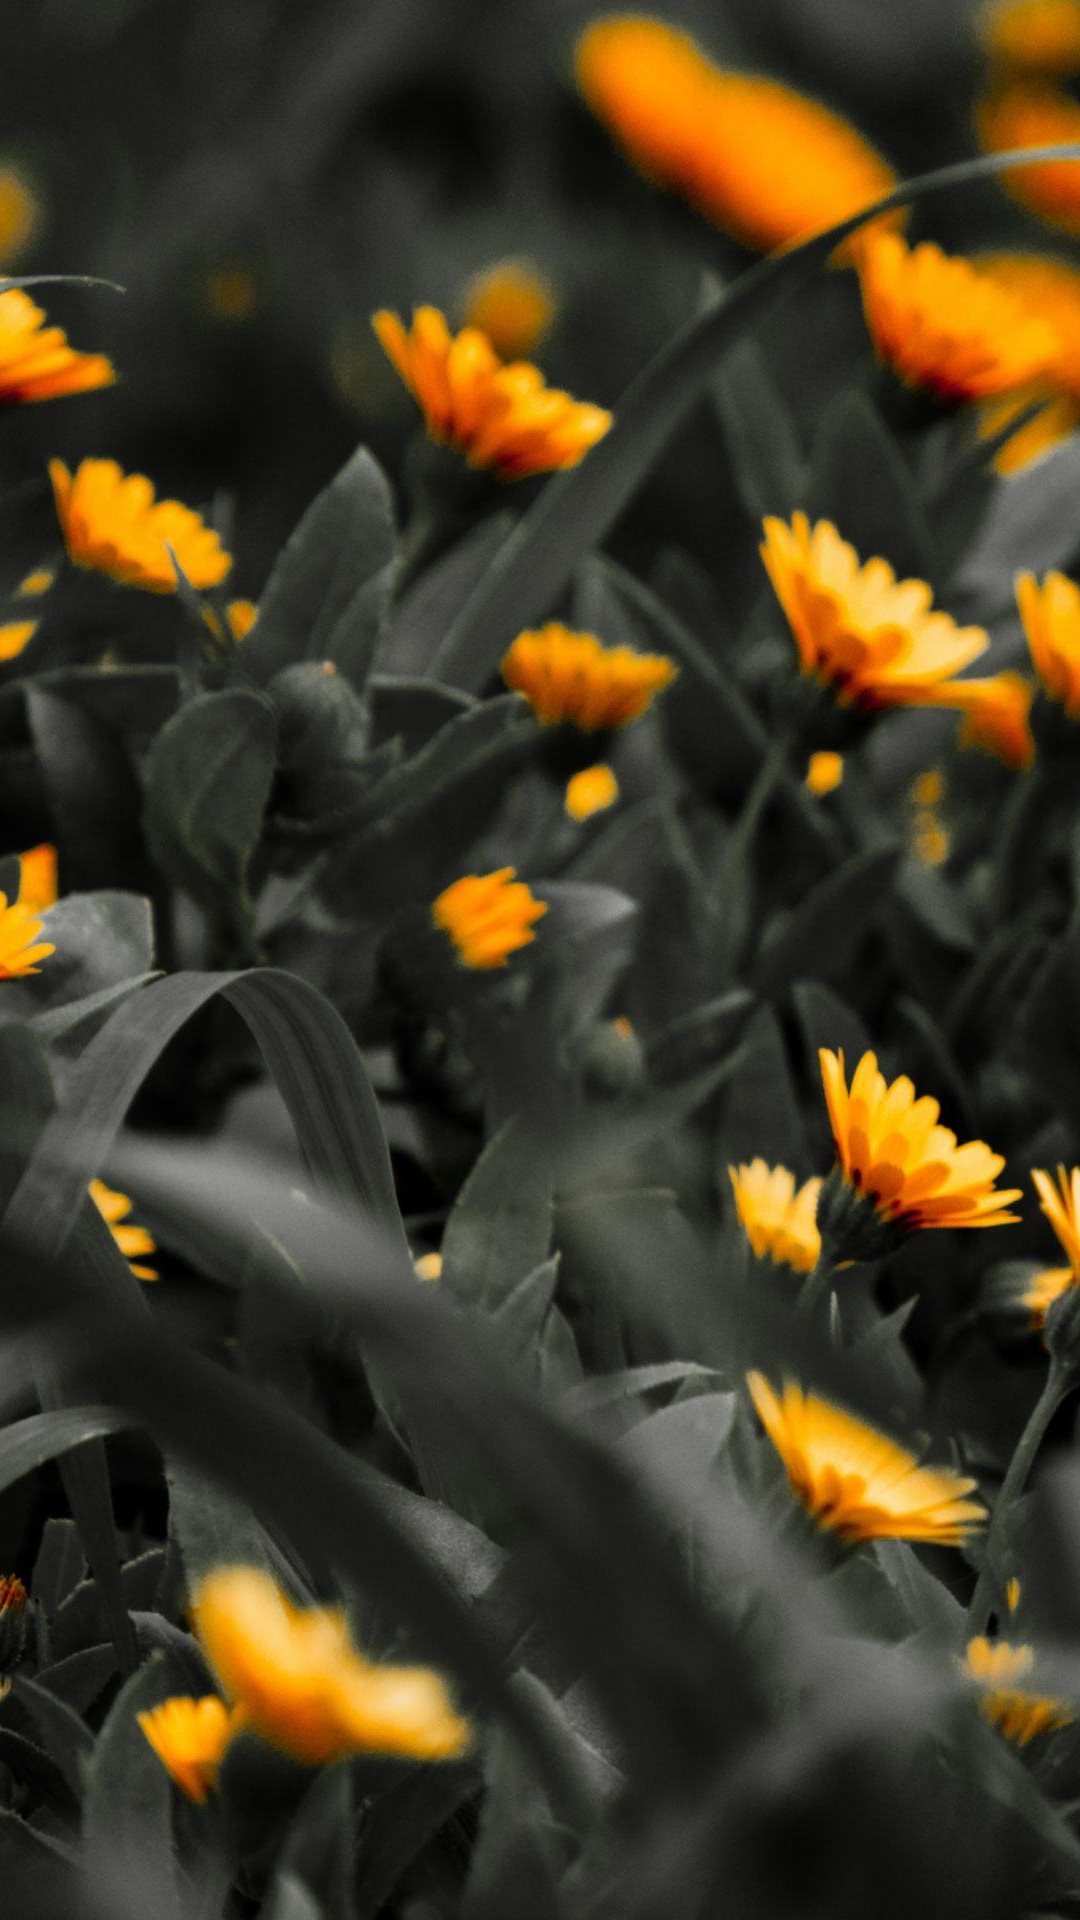 Orange-Flowers-Black-White-Photo-iPhone-6-Plus-HD-Wallpaper.